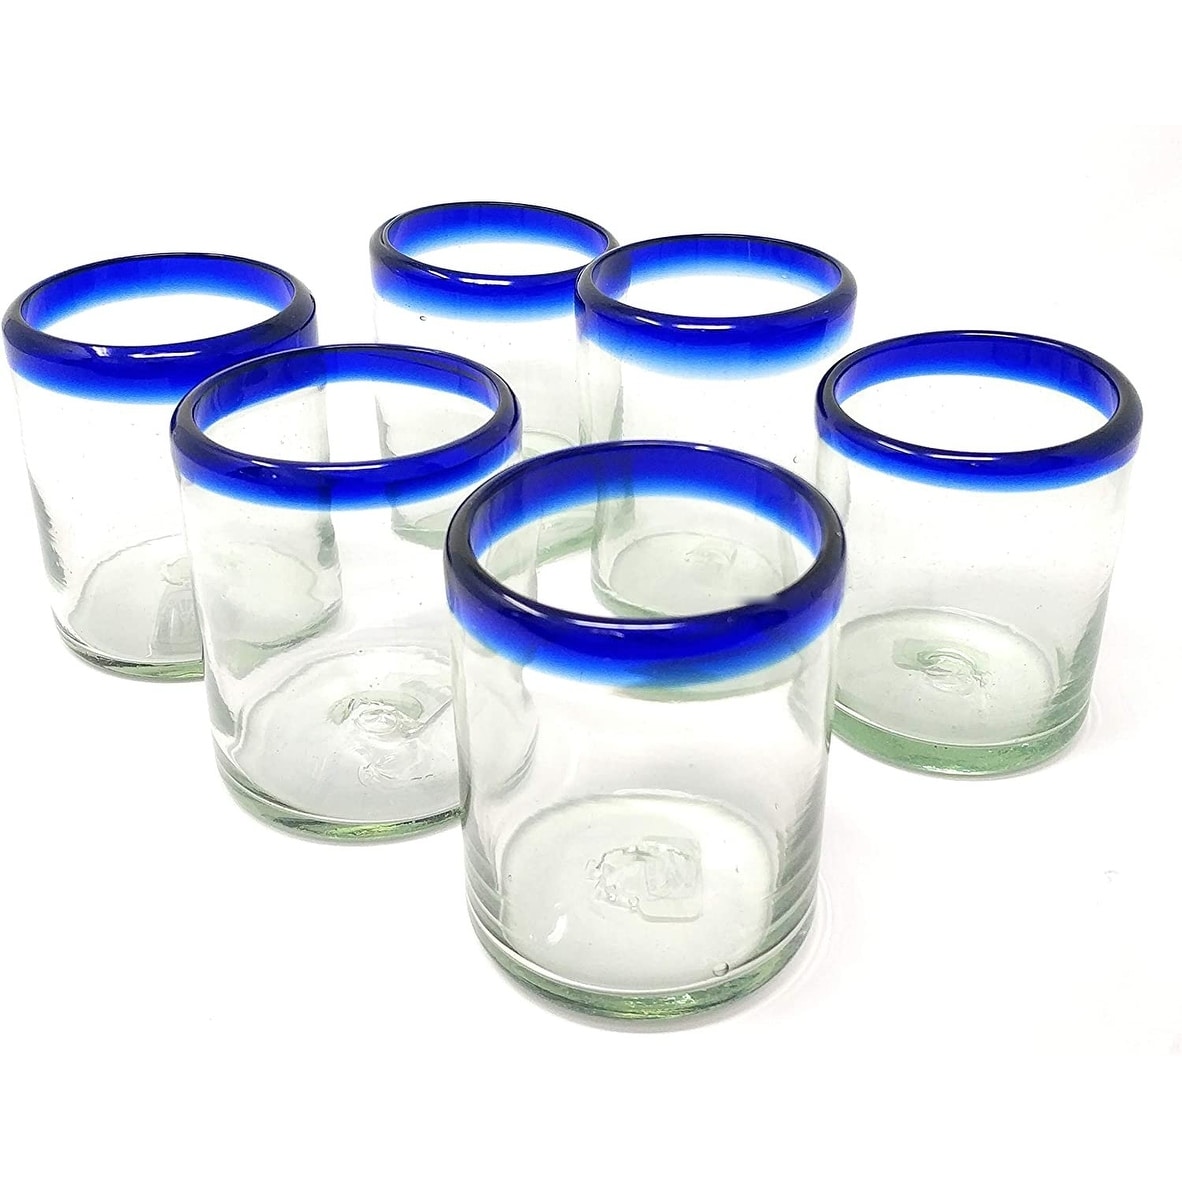 Veronese 14.5 oz Beverage Drinking Glasses (Set Of 6)